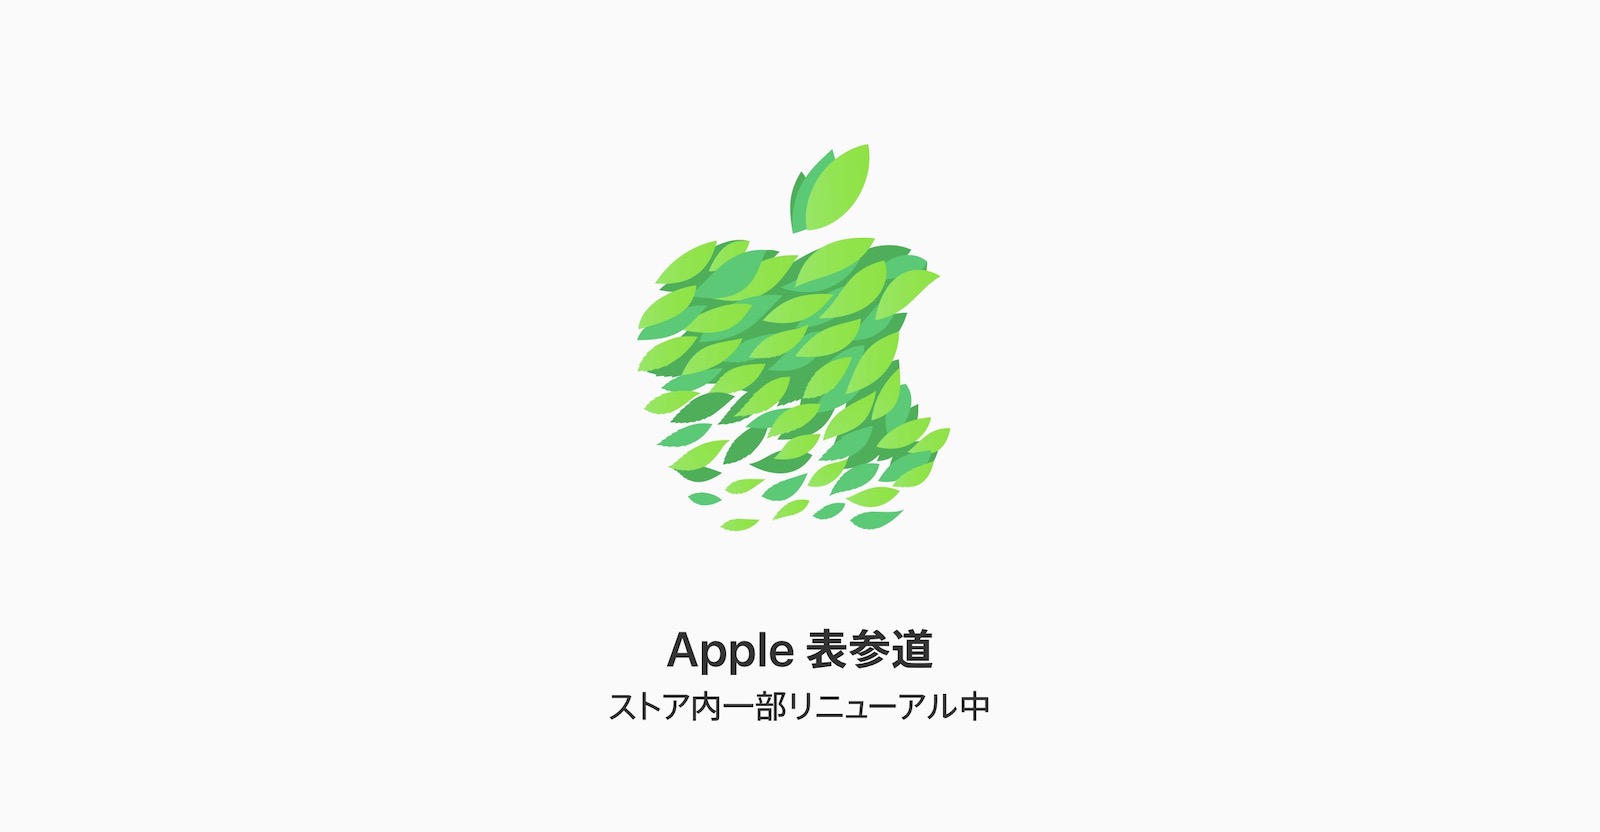 Apple-Store-New-Open-in-Japan-1